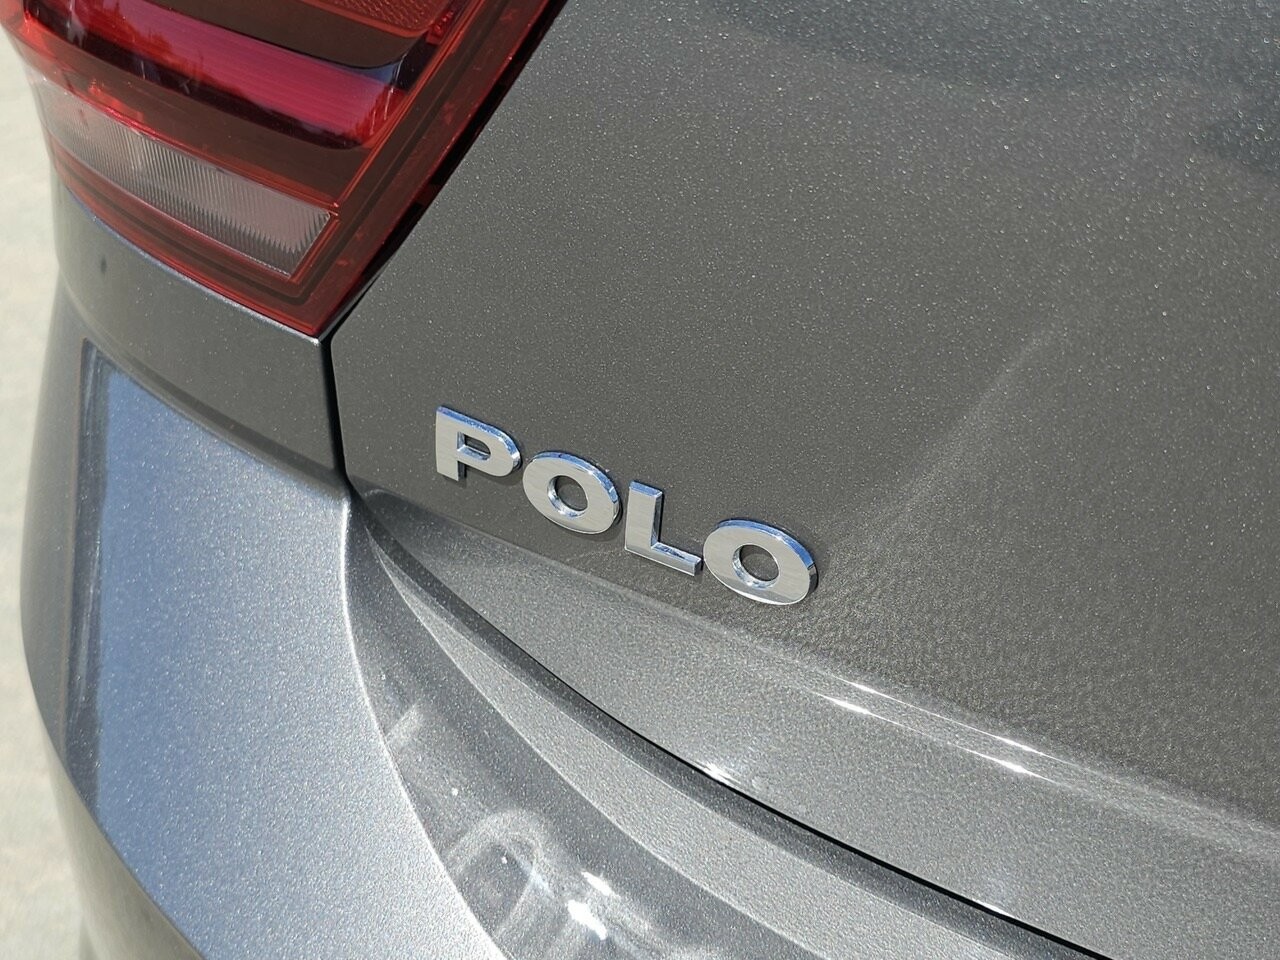 Volkswagen Polo image 3